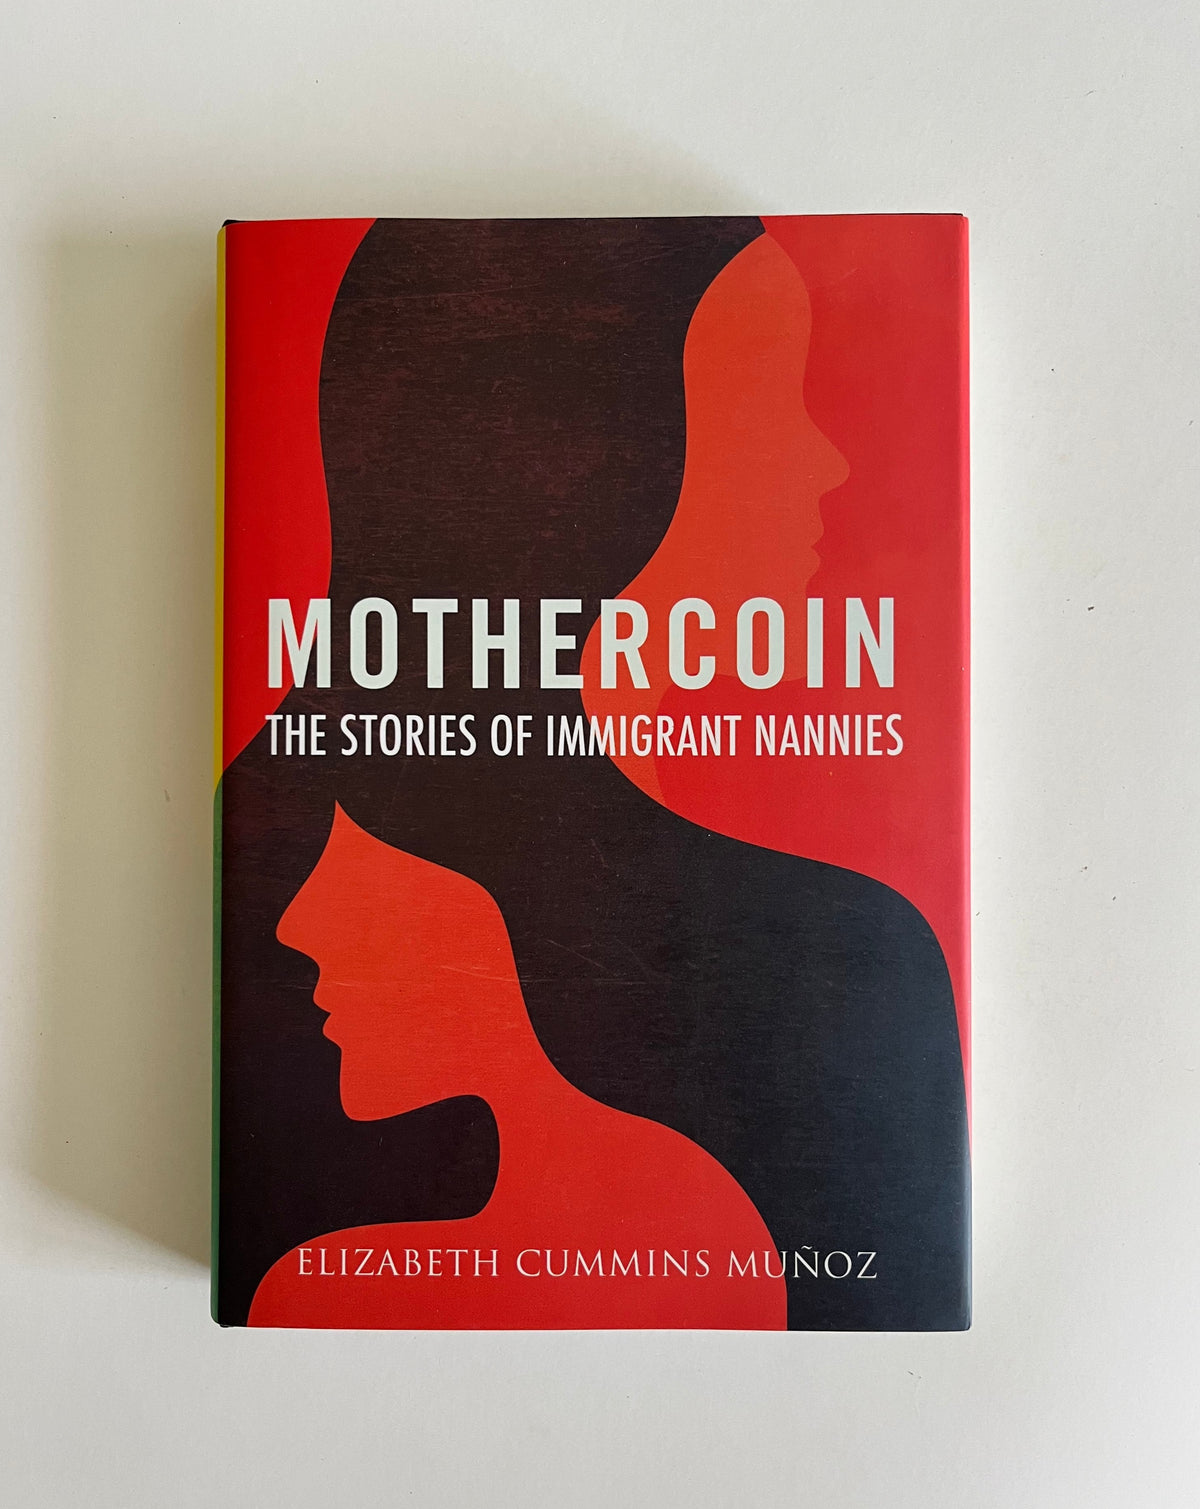 Mothercoin: Stories of Immigrant Nannies by Elizabeth Cummins Munoz